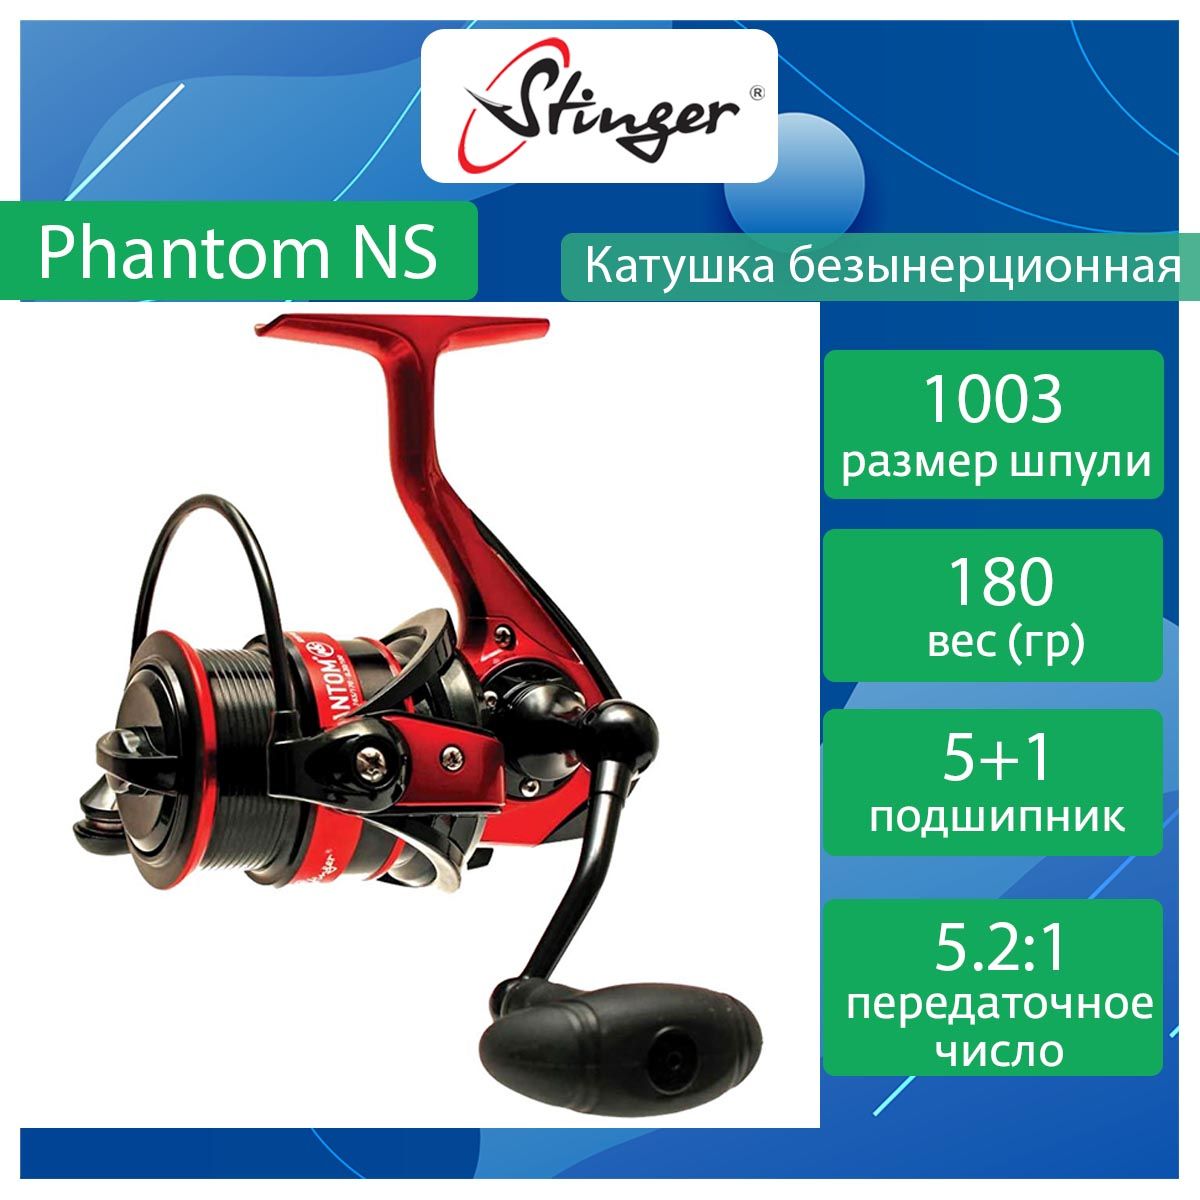 Катушка для рыбалки безынерционная Stinger Phantom NS ef53278